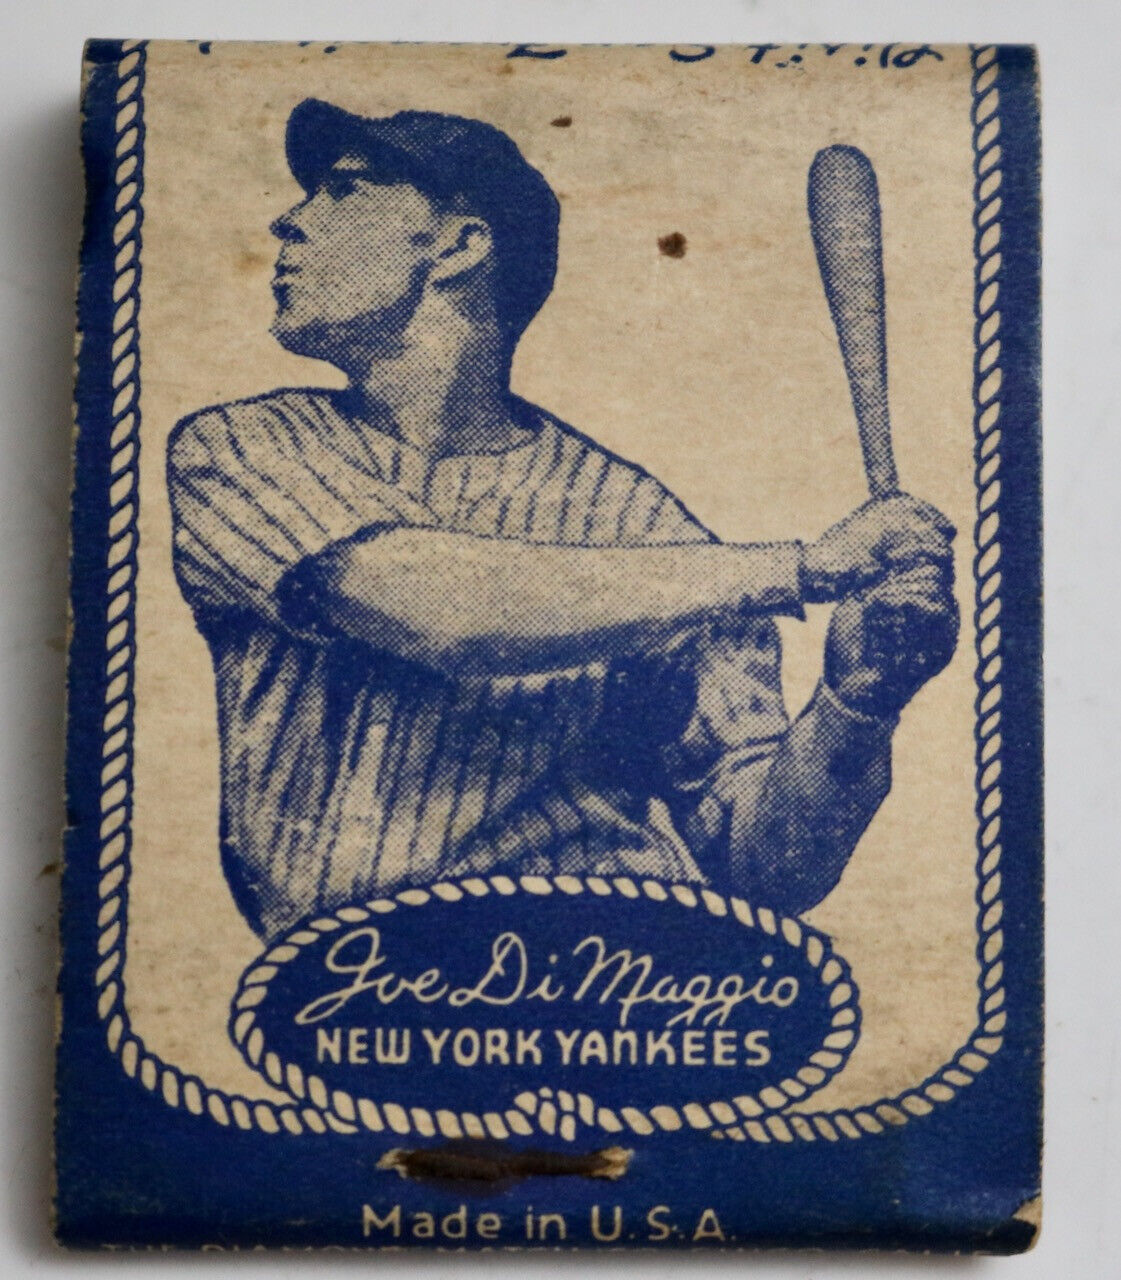 JOE DI MAGGIO'S GROTTO vintage 1930's matchbook advertising